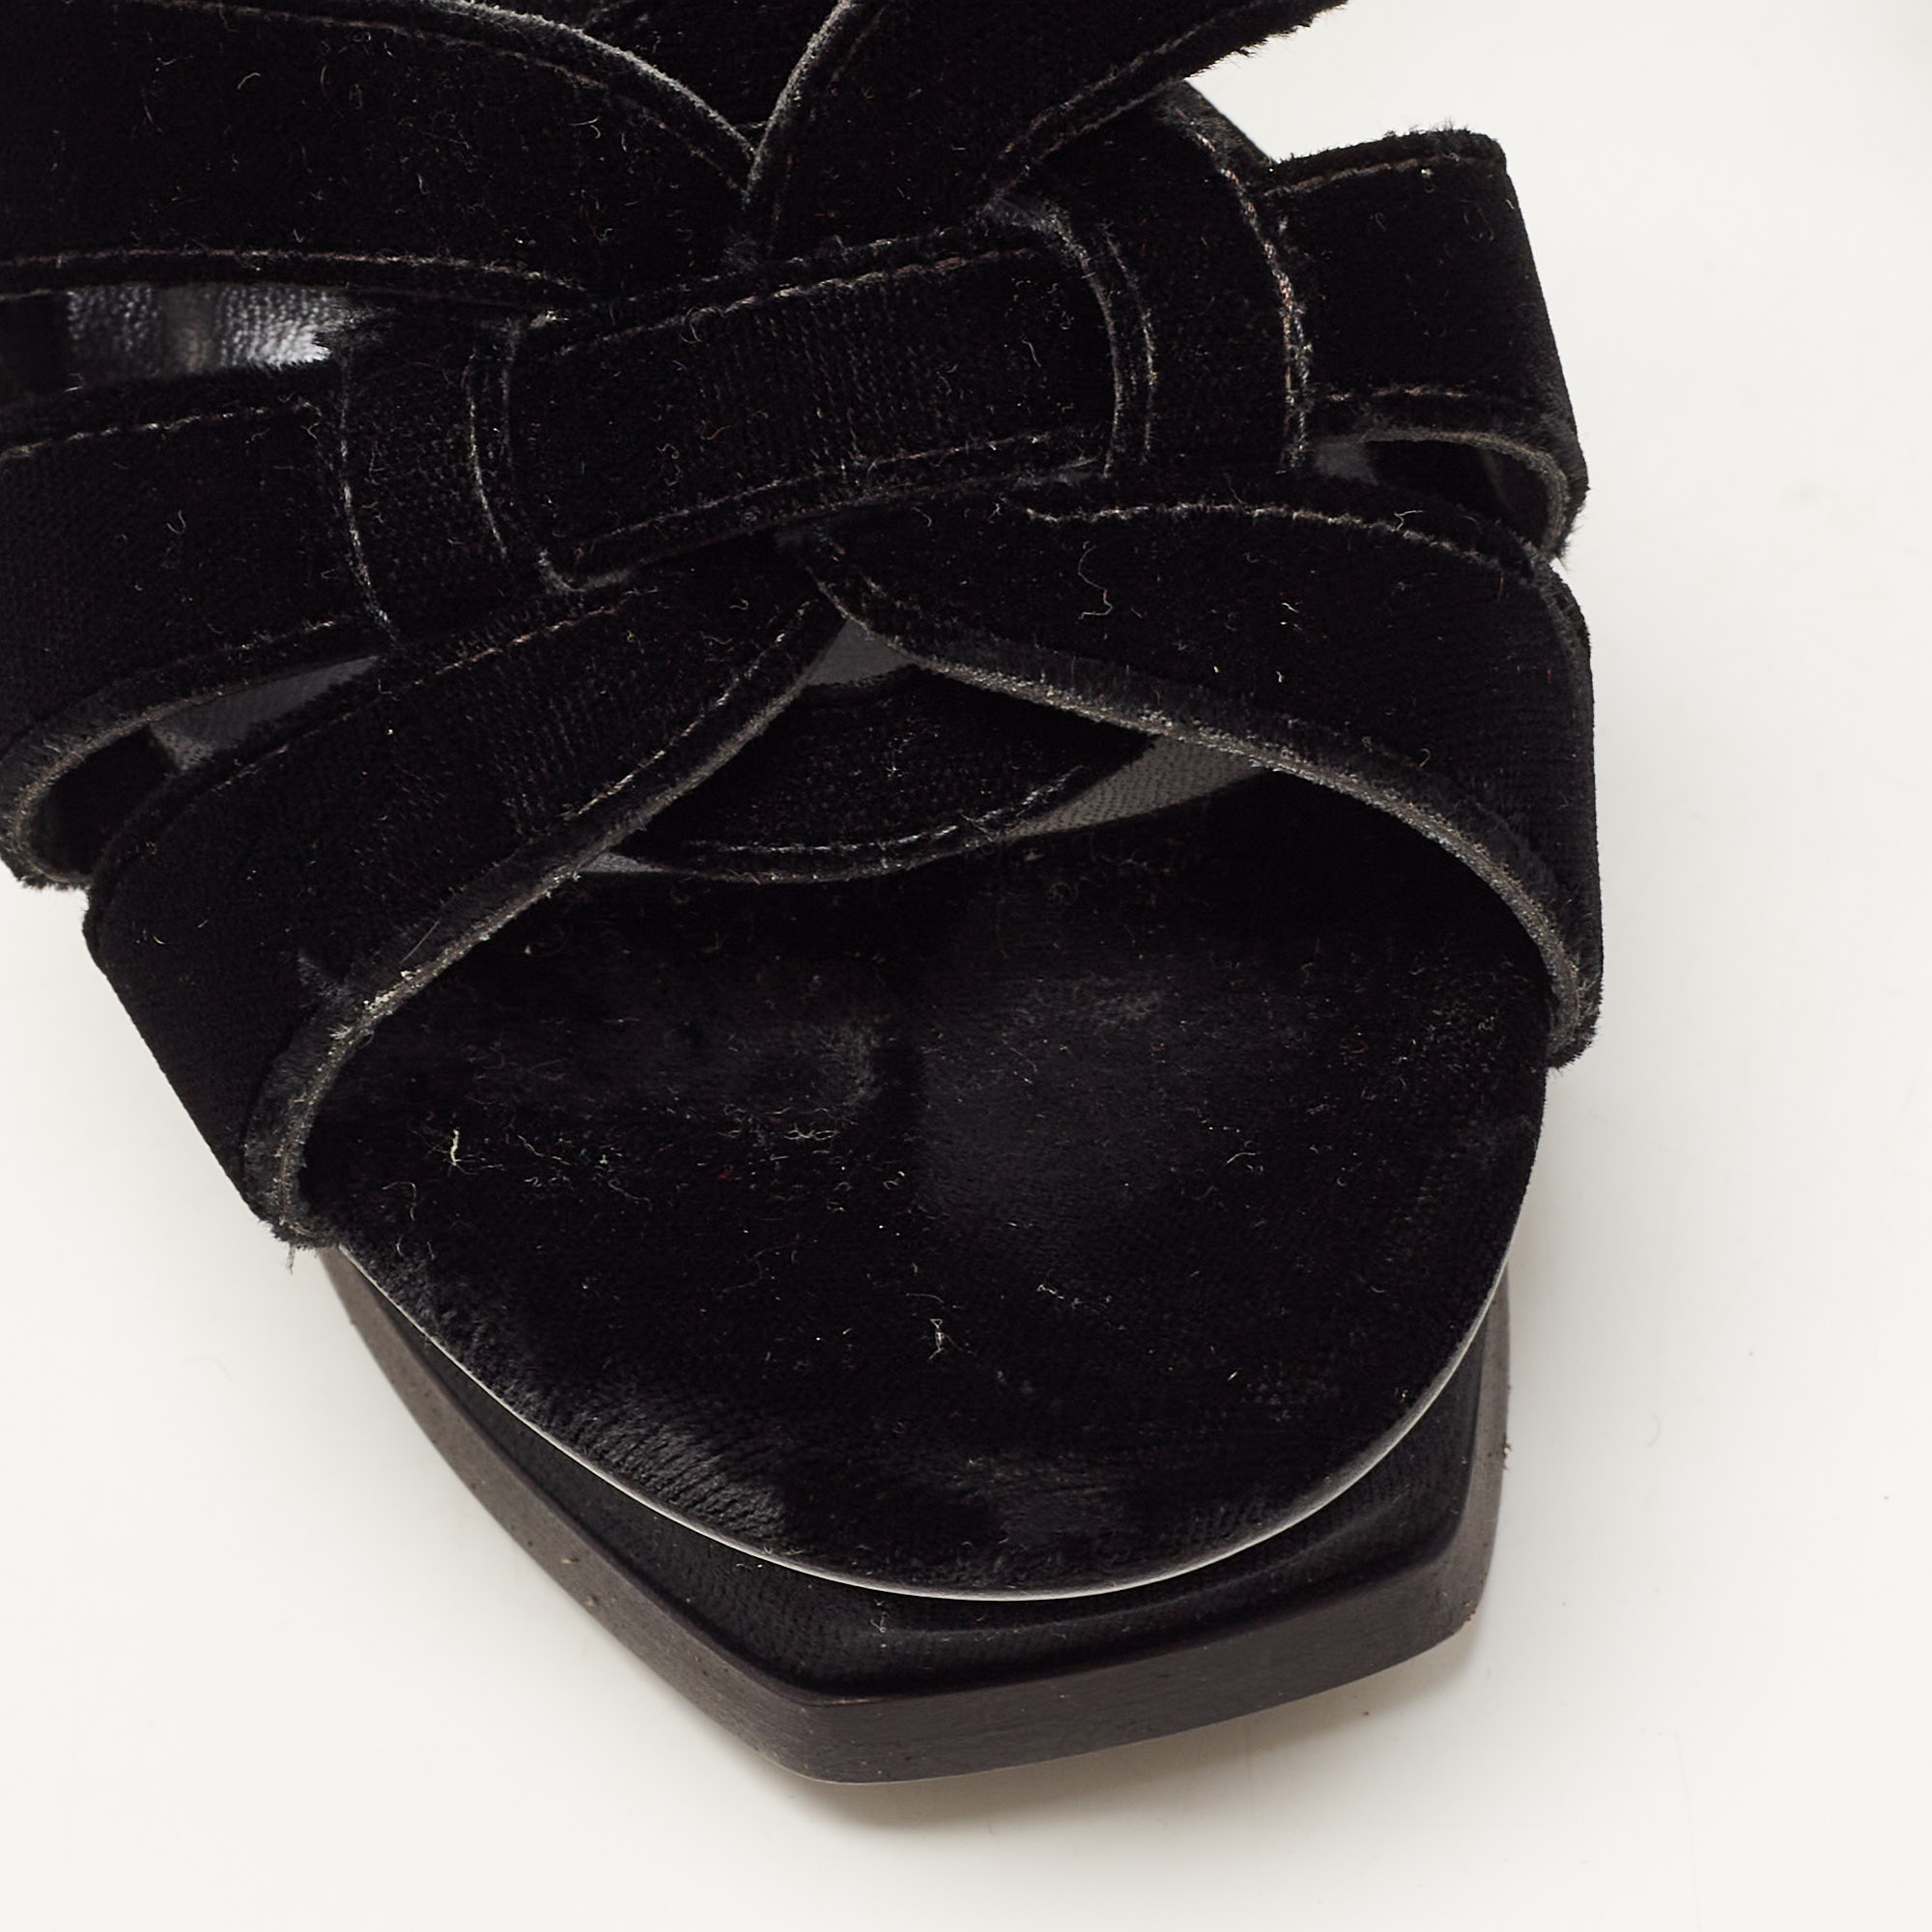 Saint Laurent Black Velvet Tribute Sandals Size 38.5